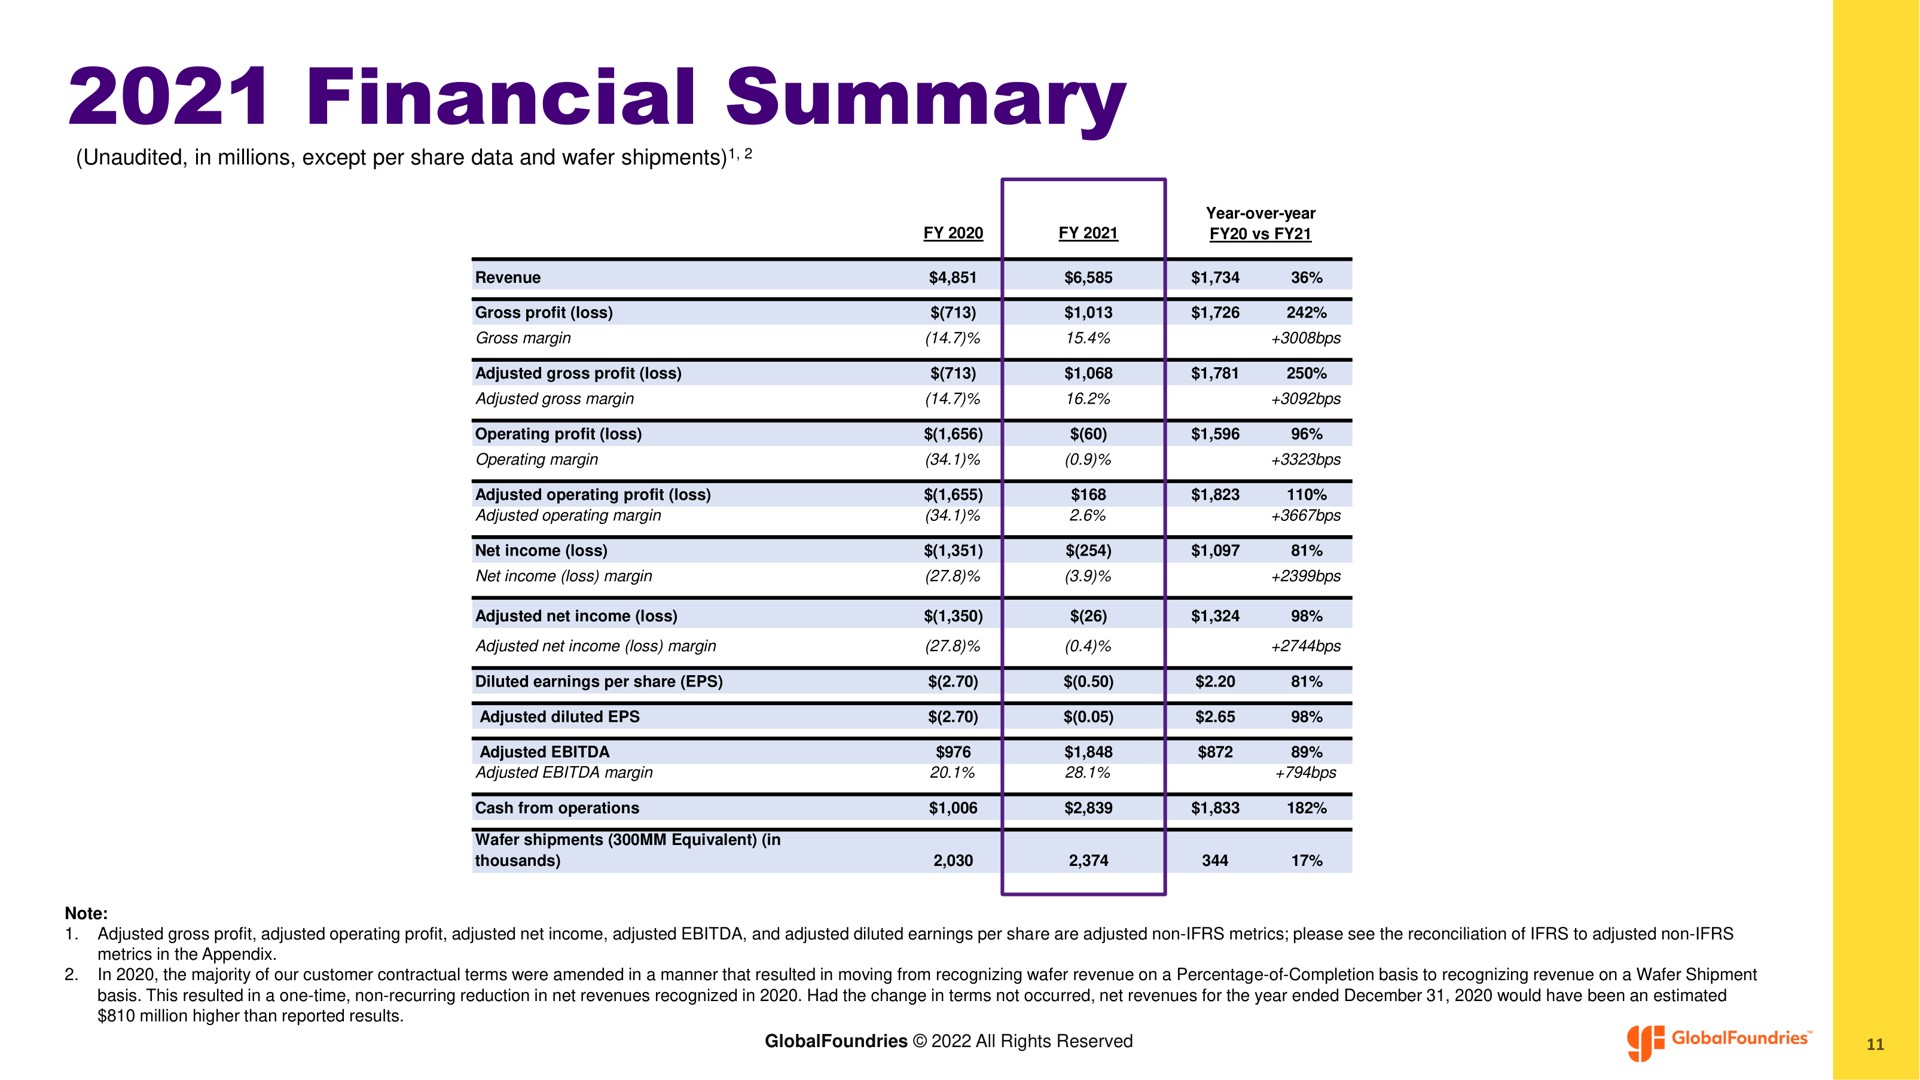 financial summary | GlobalFoundries